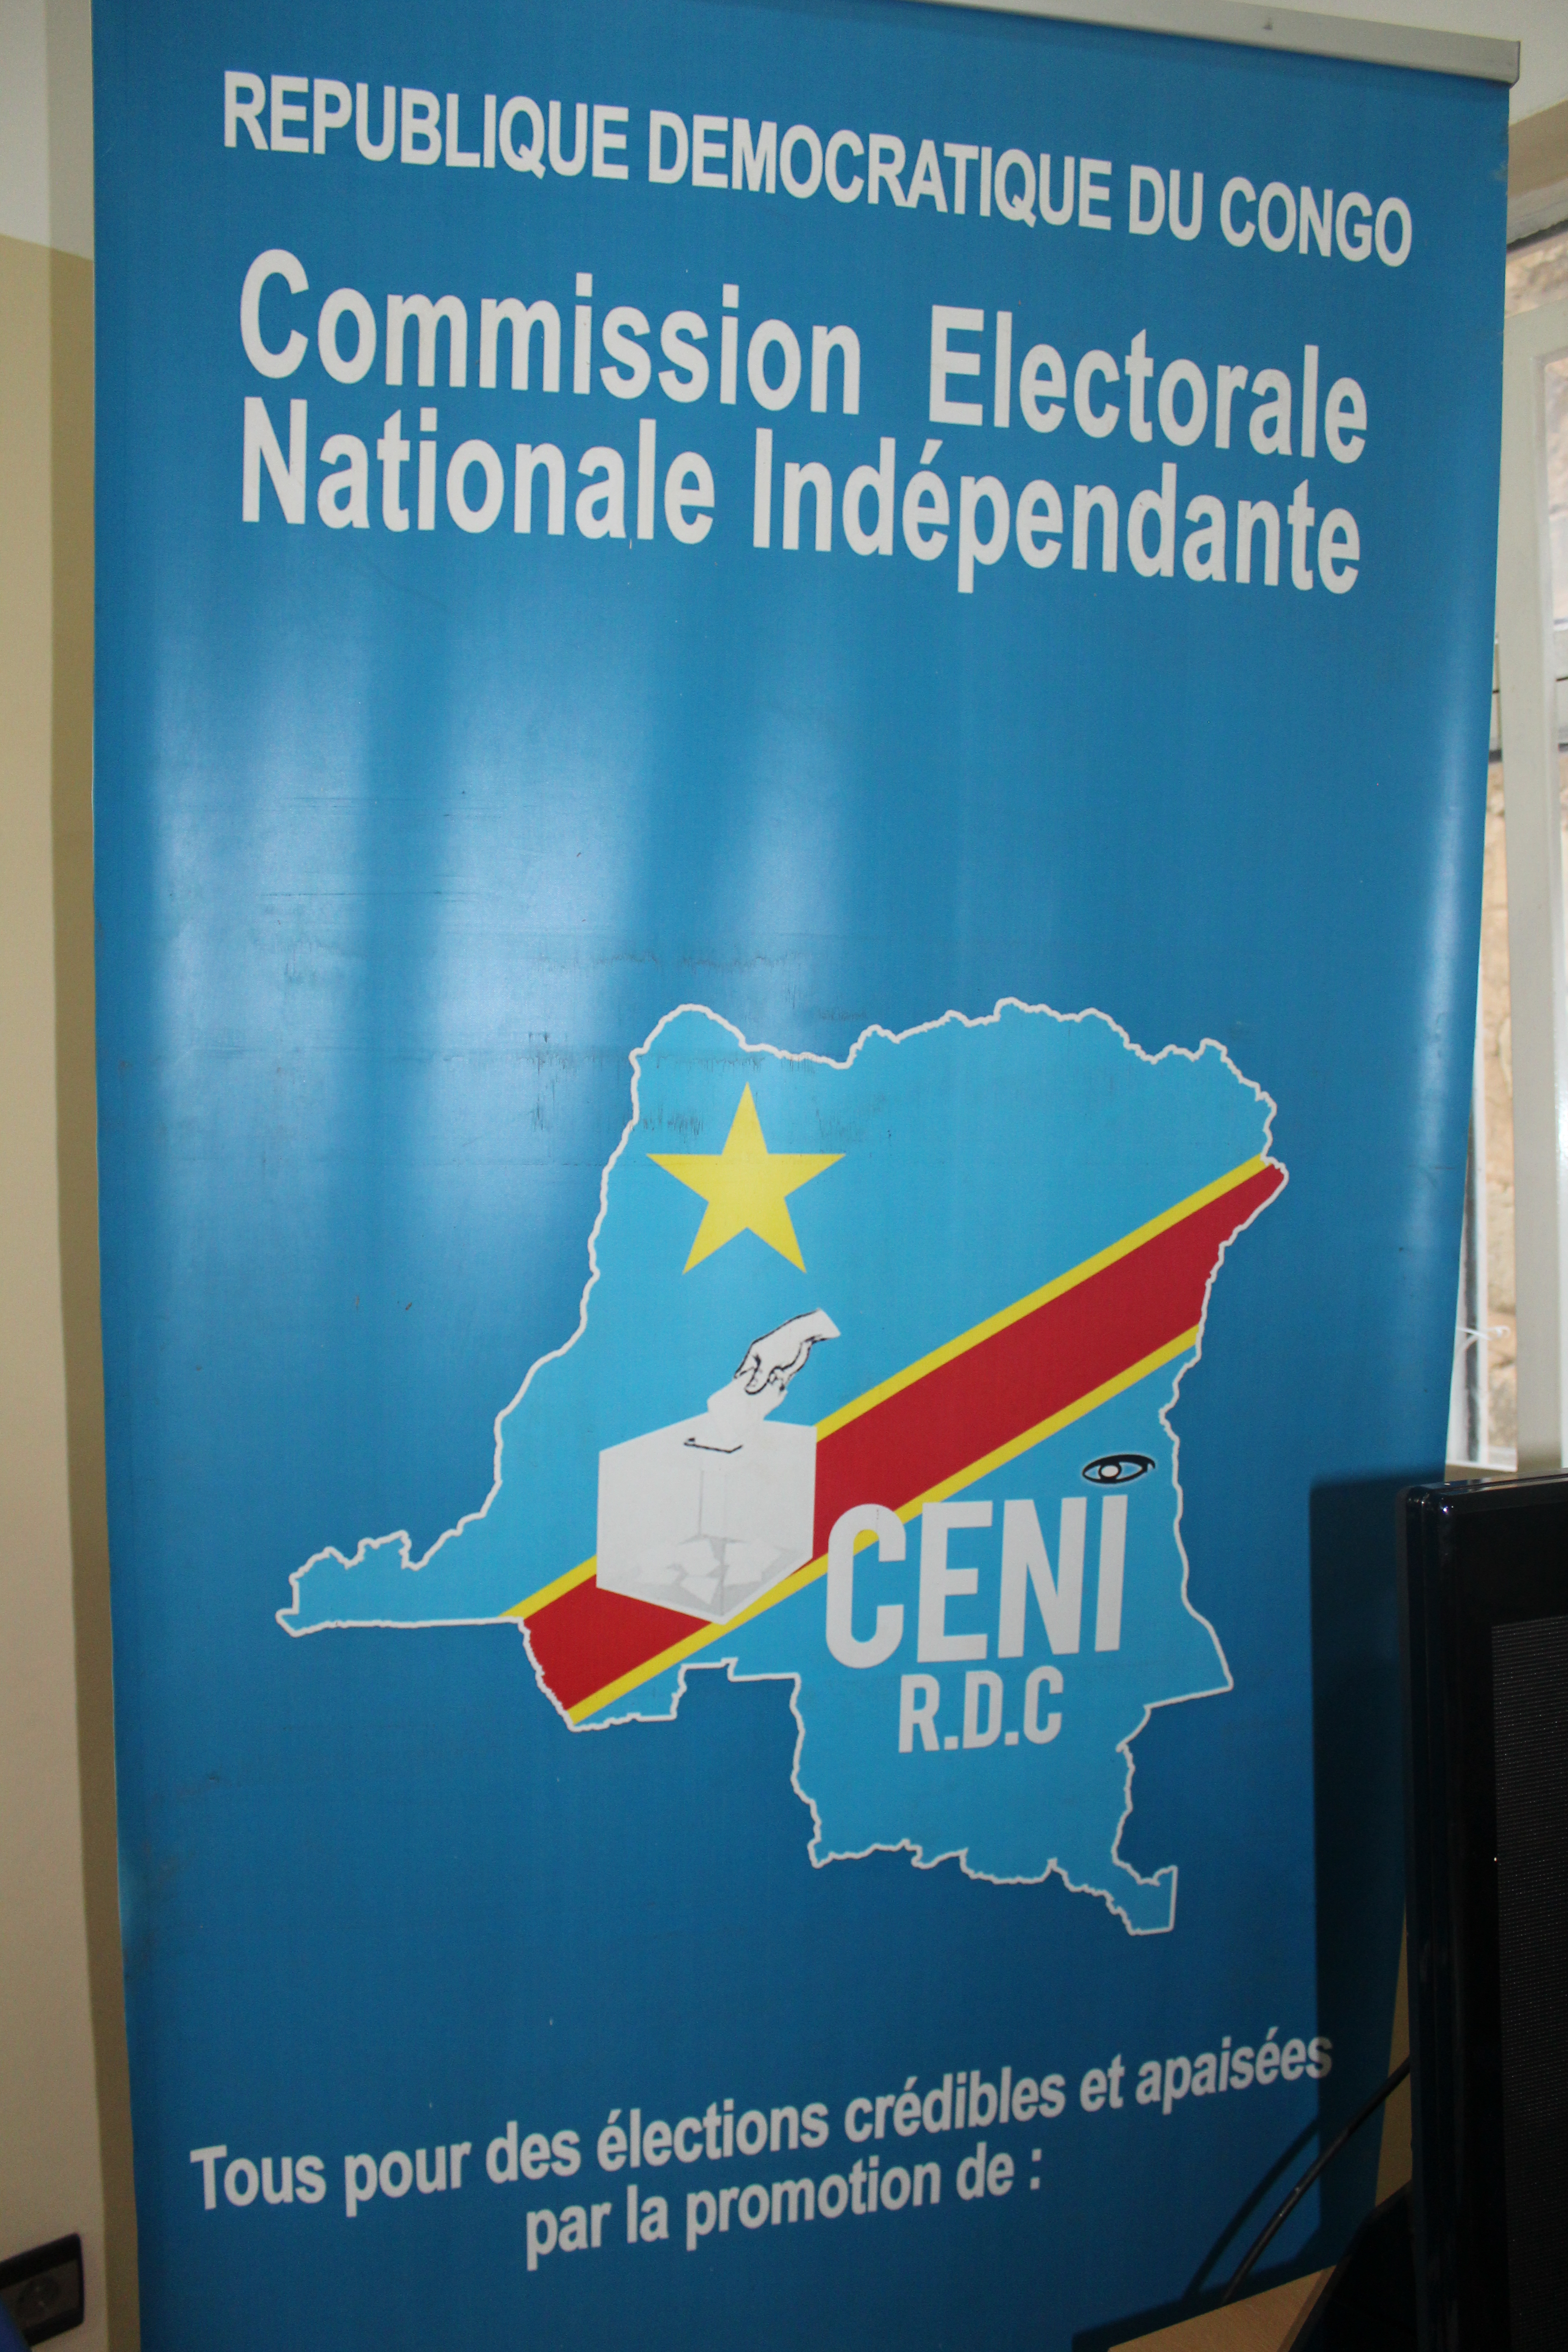 Elections : La CENI accorde 2 jours aux retardataires